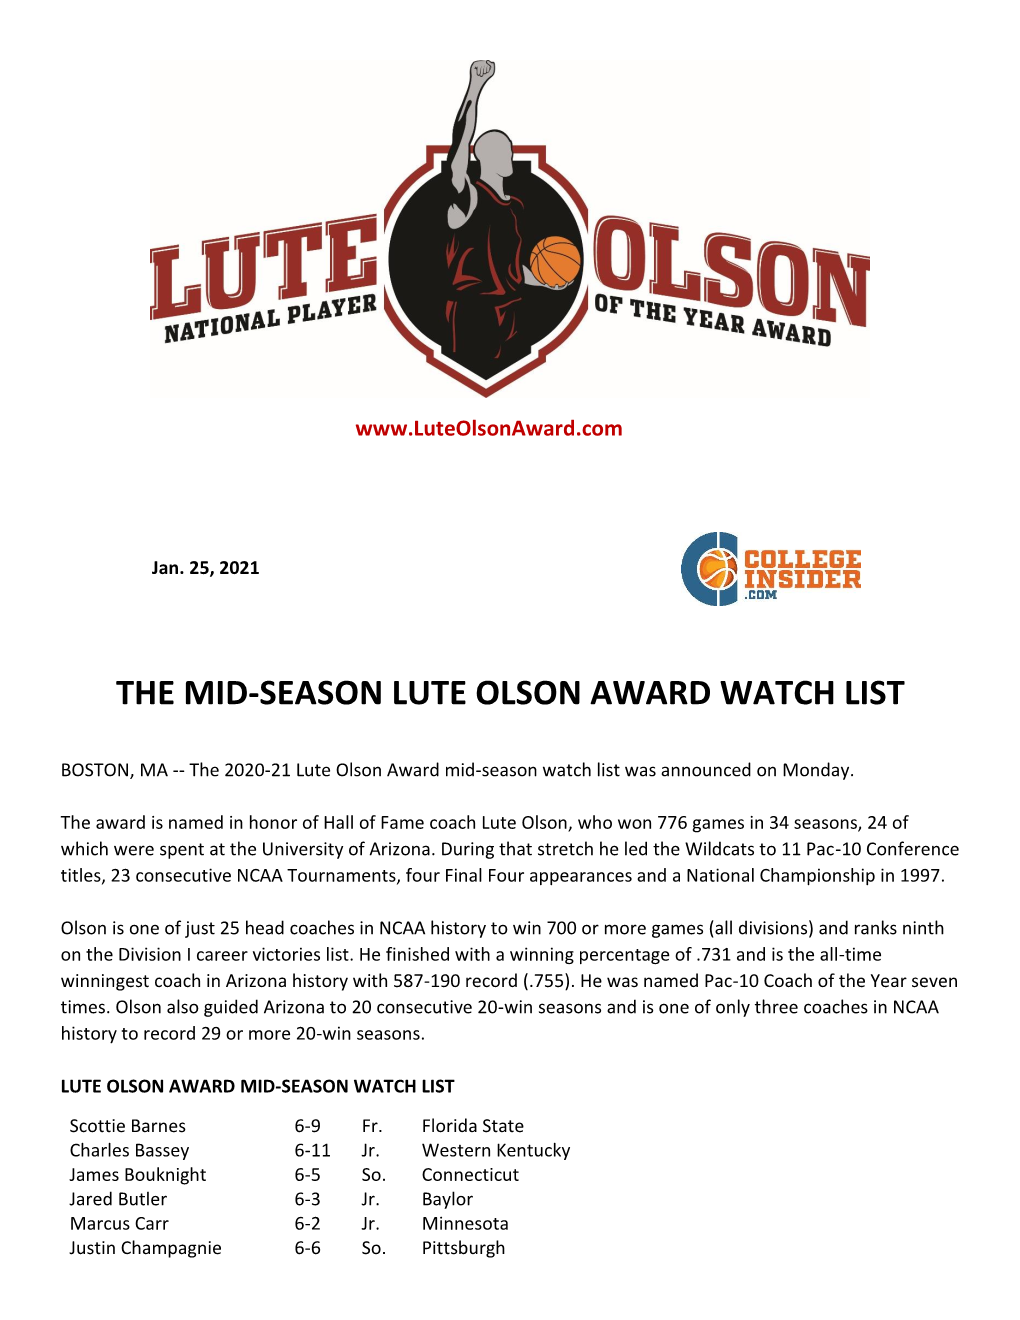 The Mid-Season Lute Olson Award Watch List